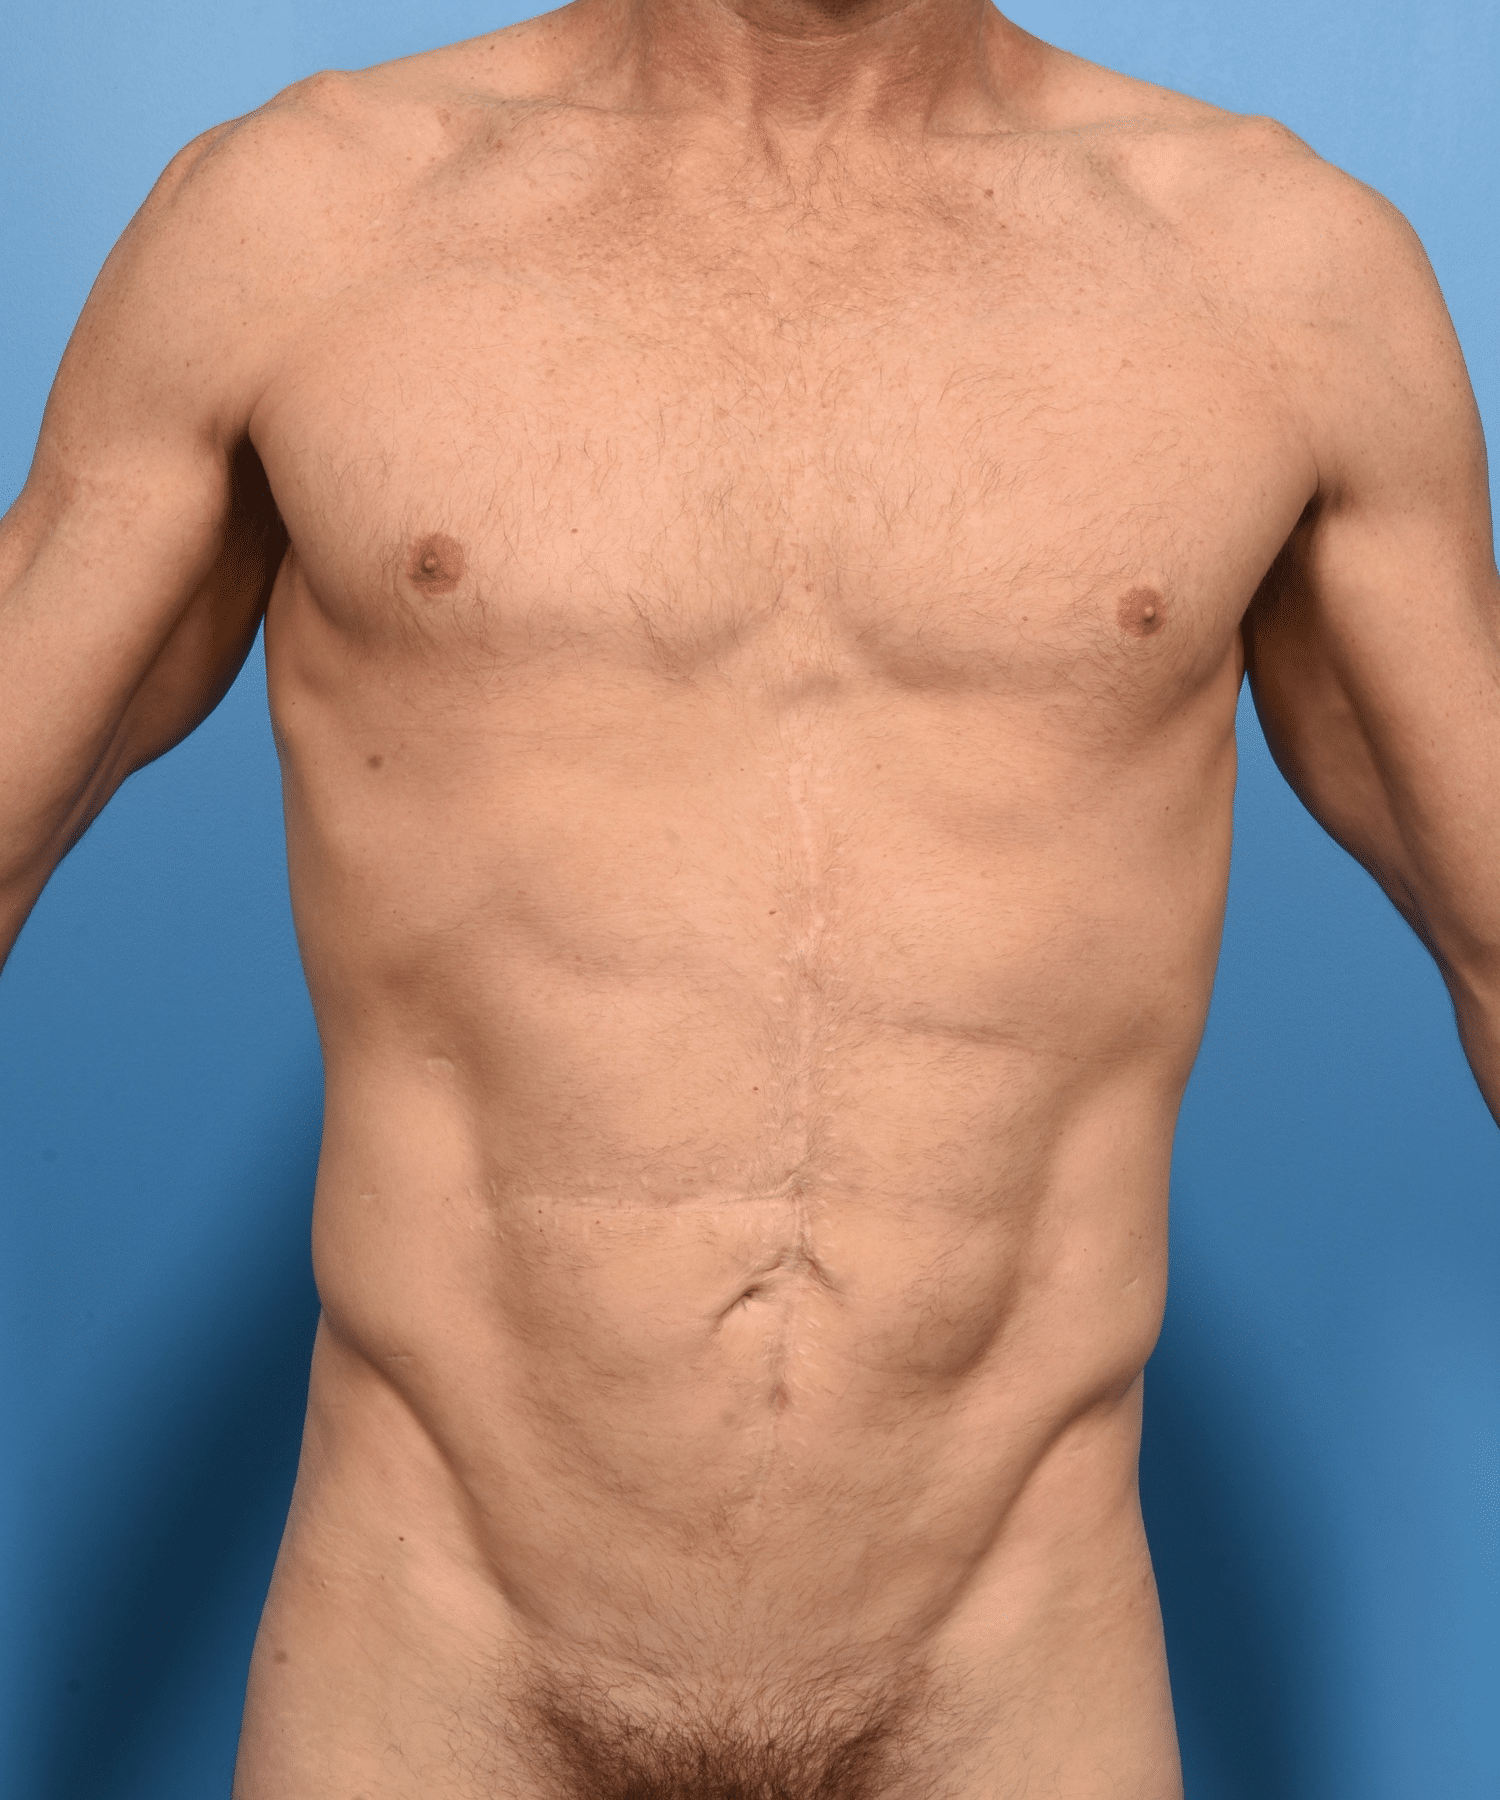 VASER lipo of abdomen and flanks